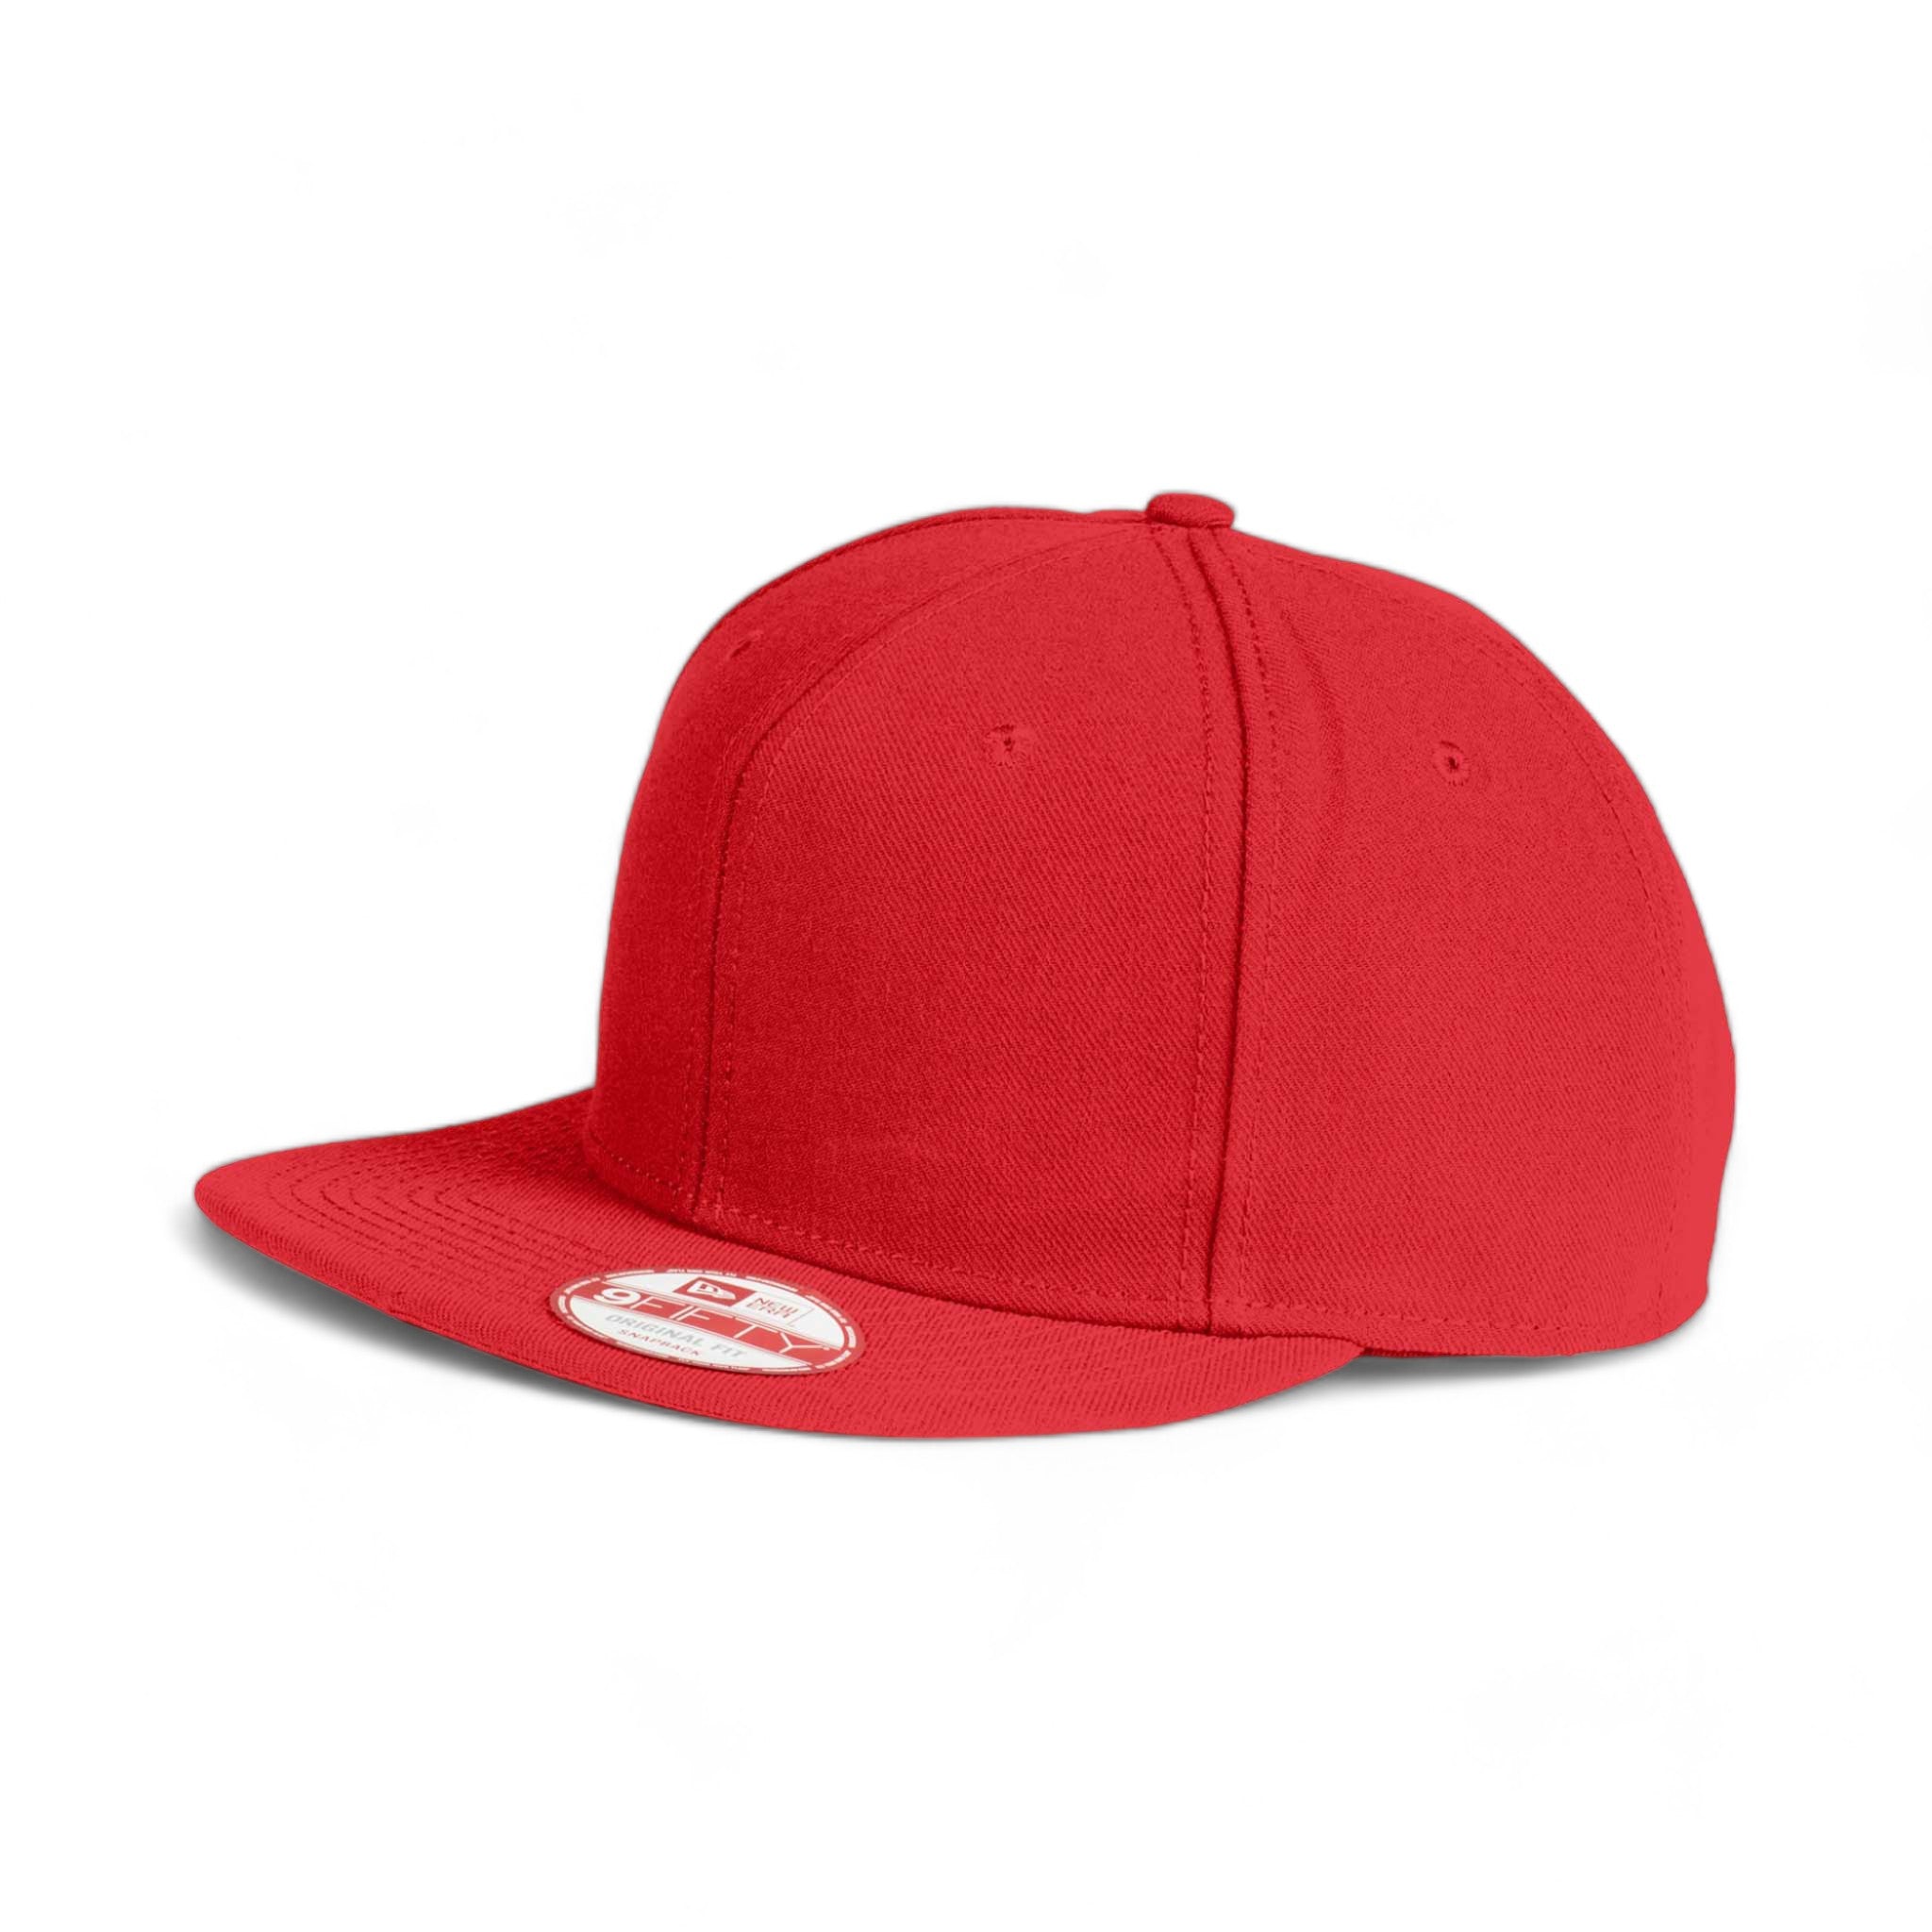 Side view of New Era NE402 custom hat in scarlet